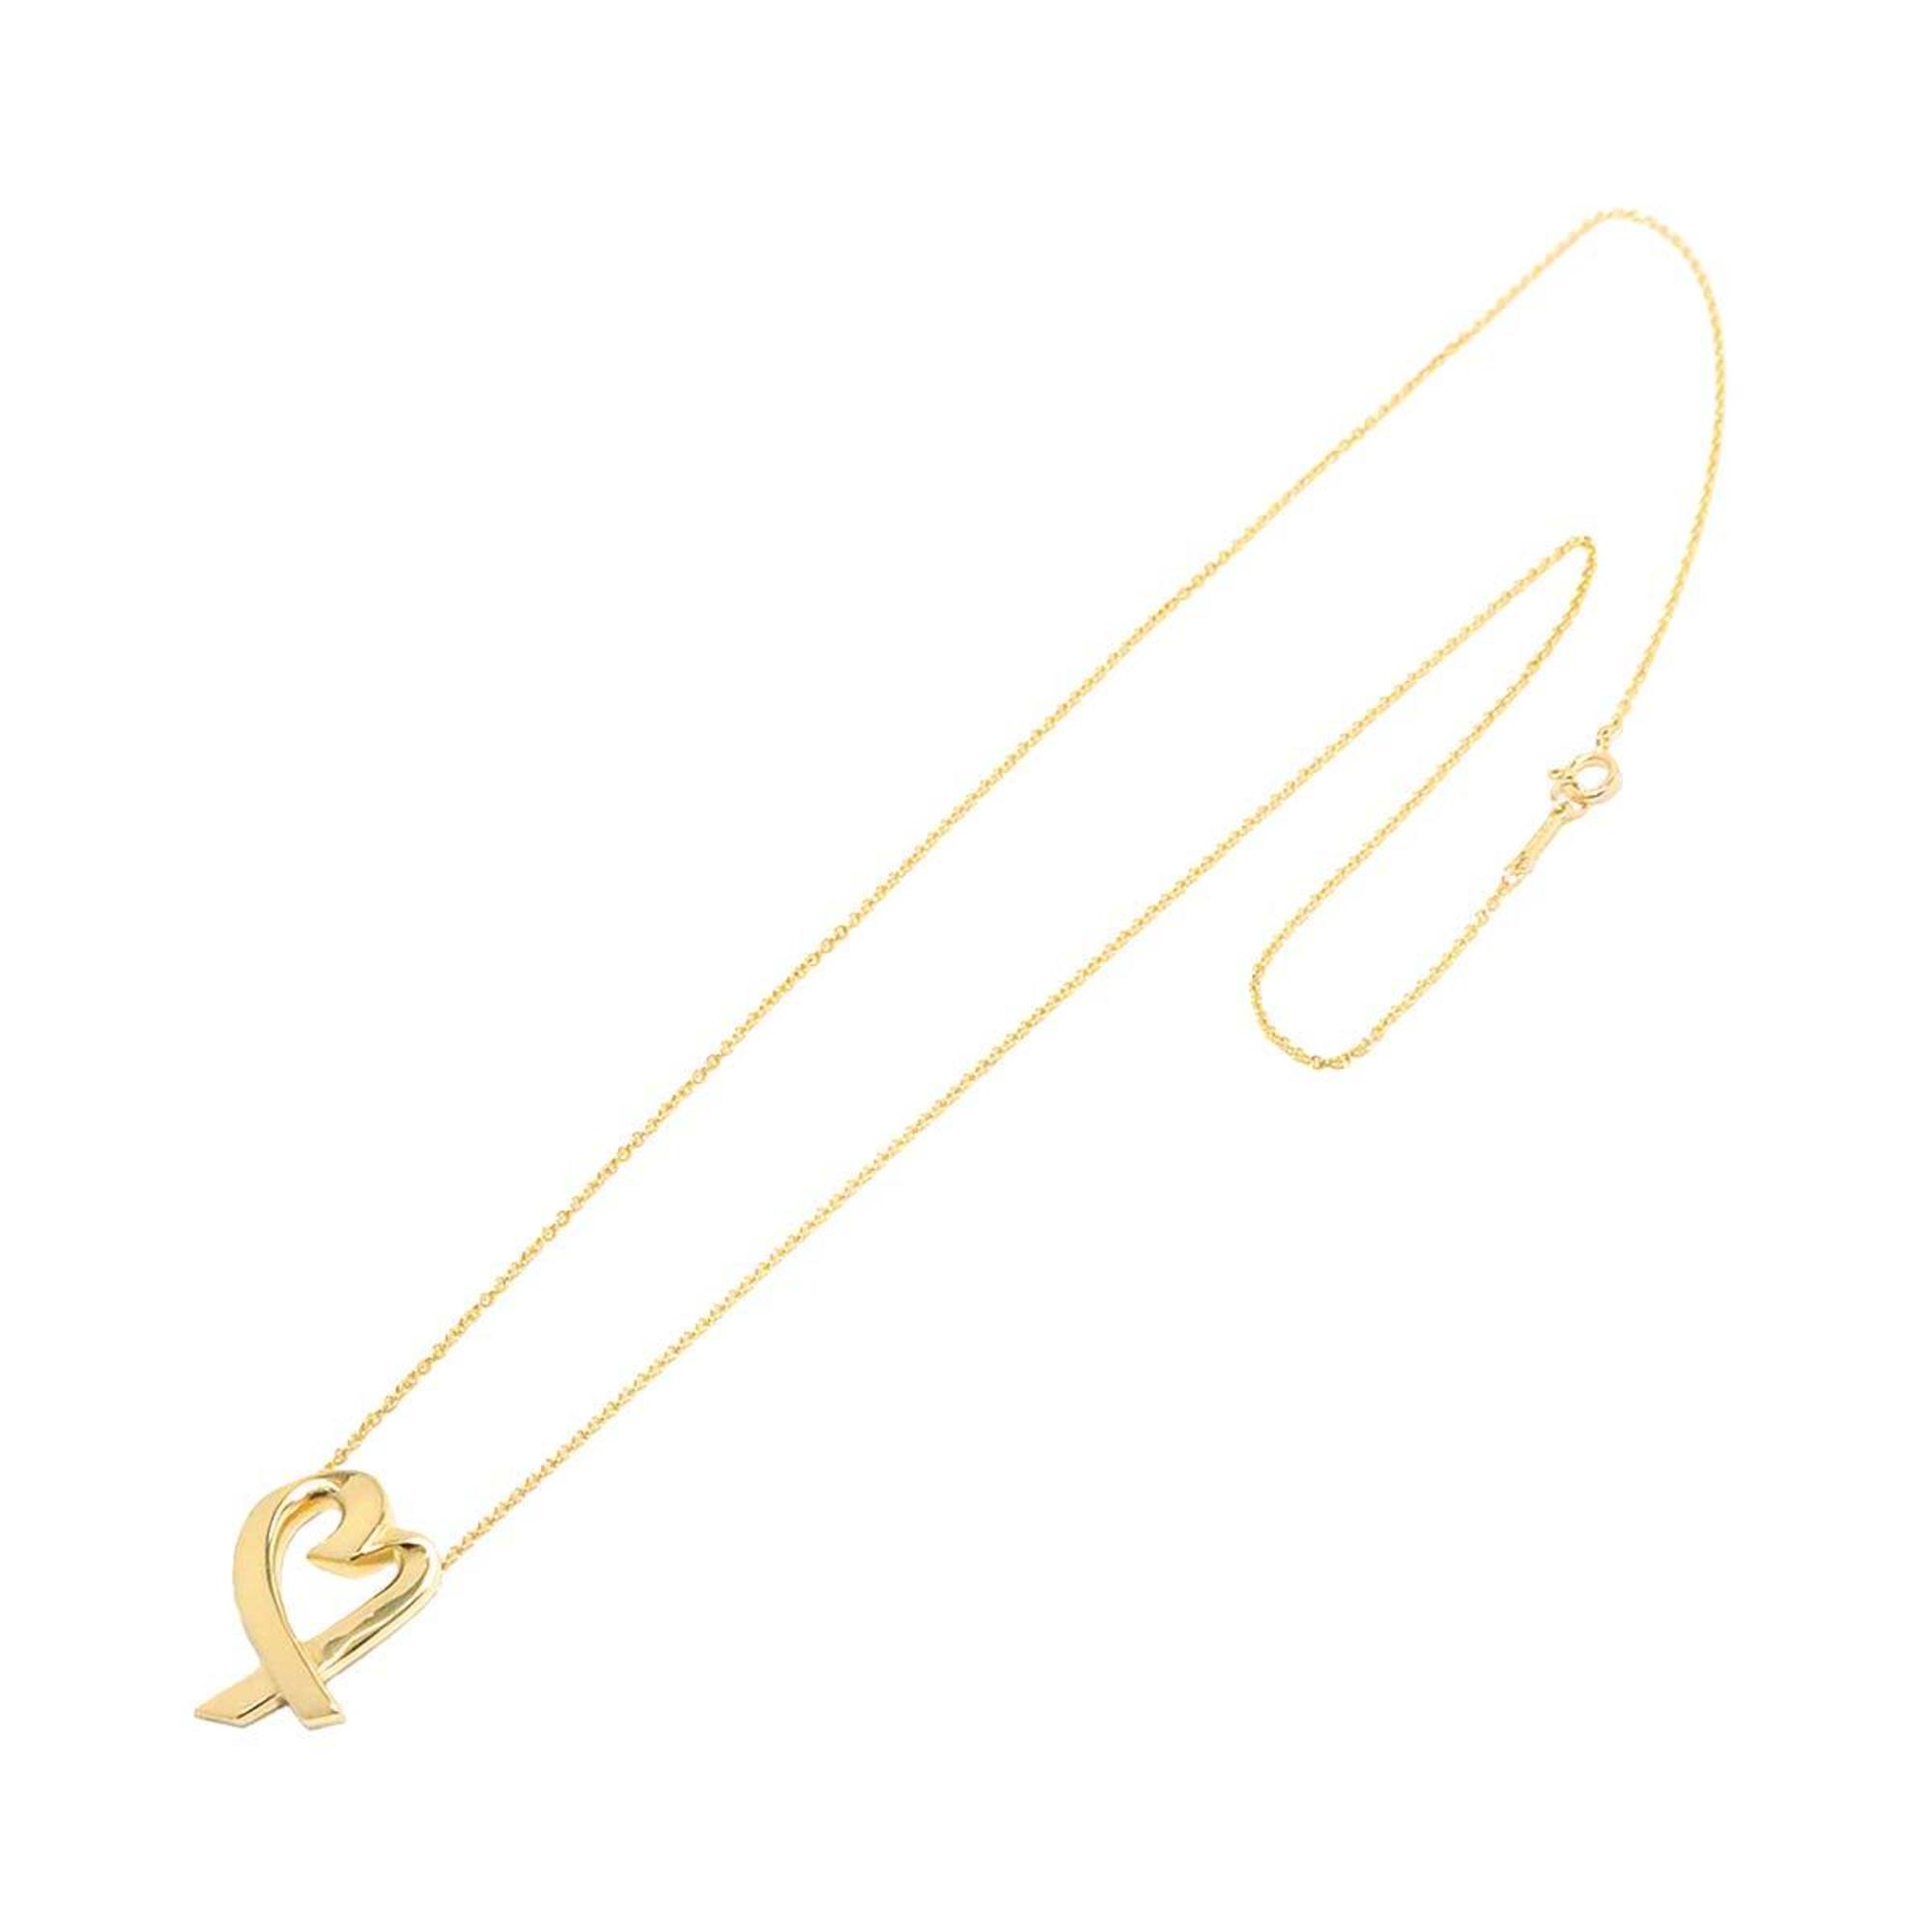 Tiffany & Co. Loving Heart Necklace 47cm K18 YG Yellow Gold 750